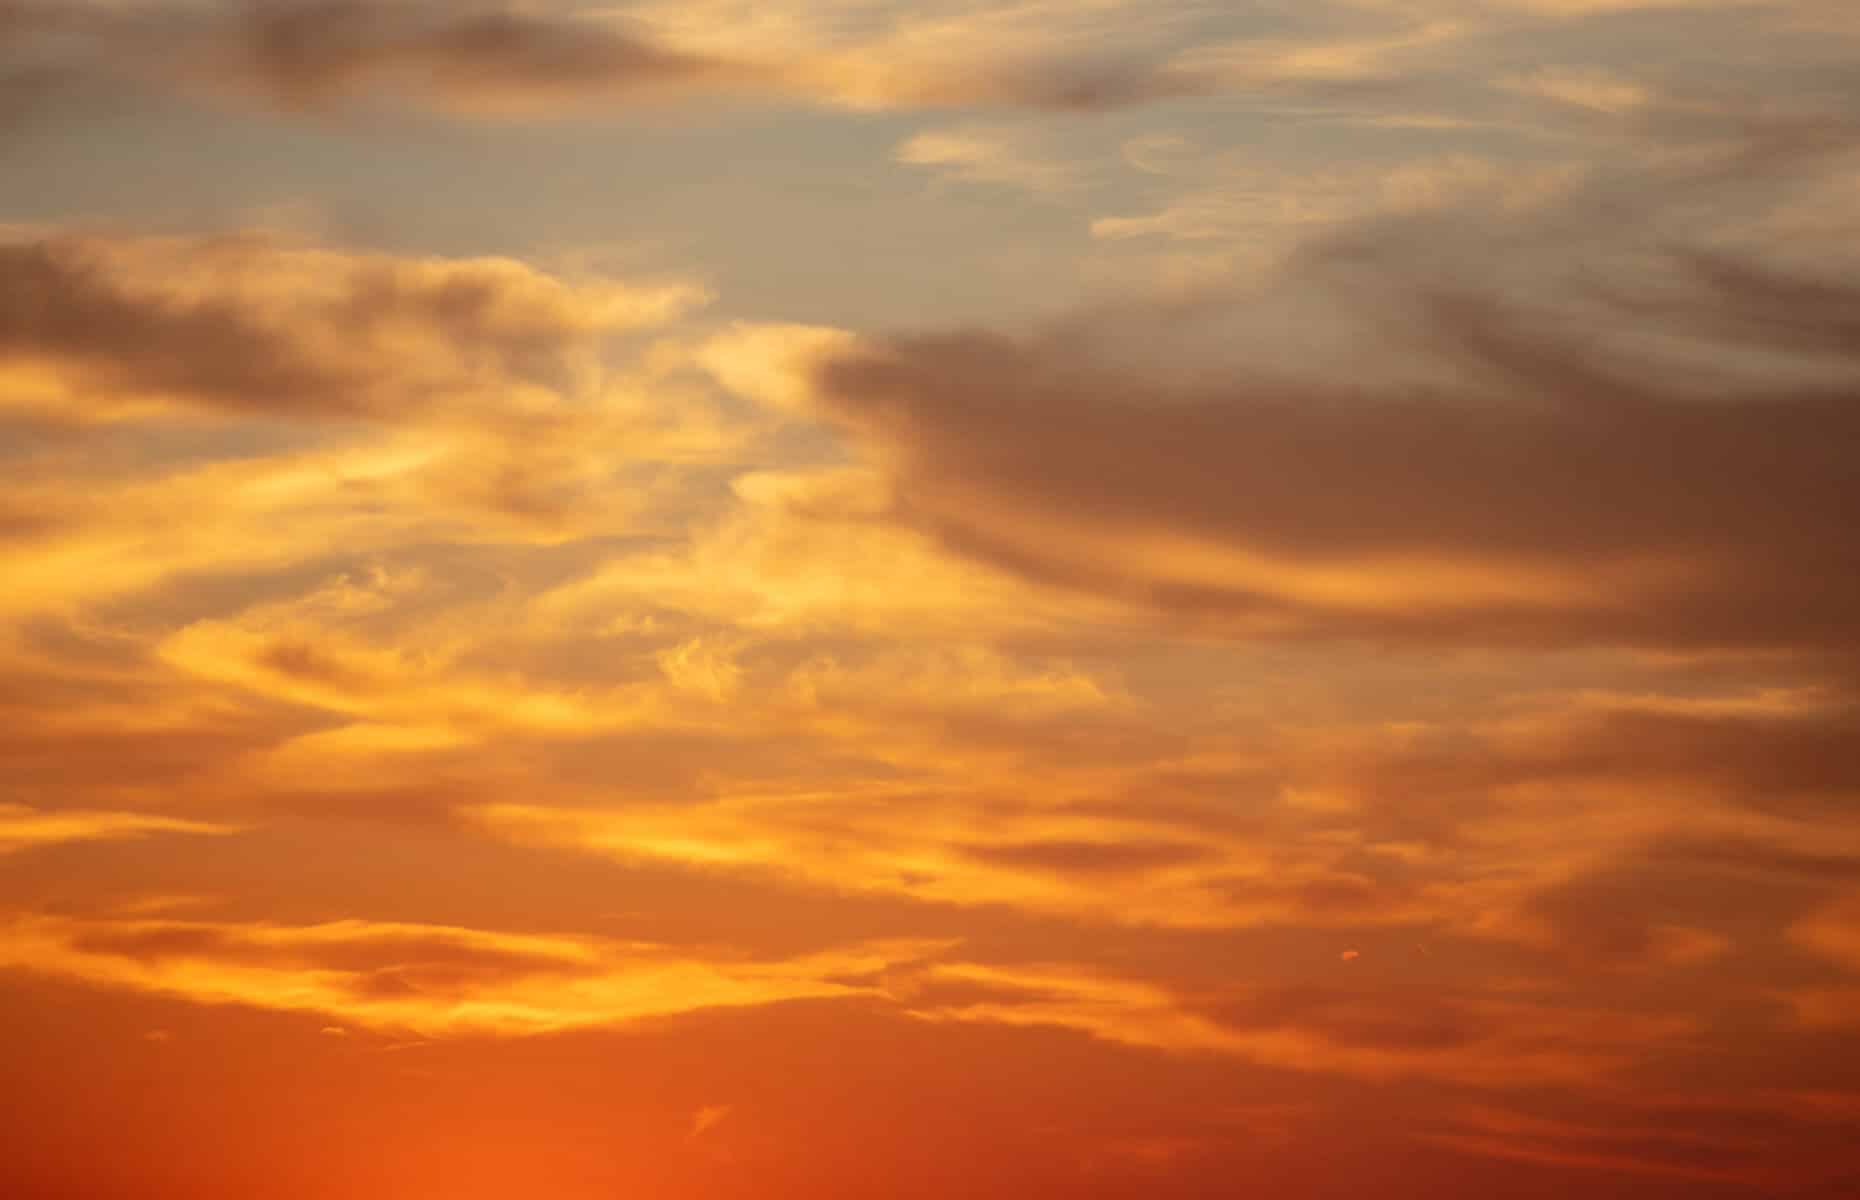 Sunset orange cloudscape background. Dramatic magical sunrise over orange cloudy sky. Twilight, dawn